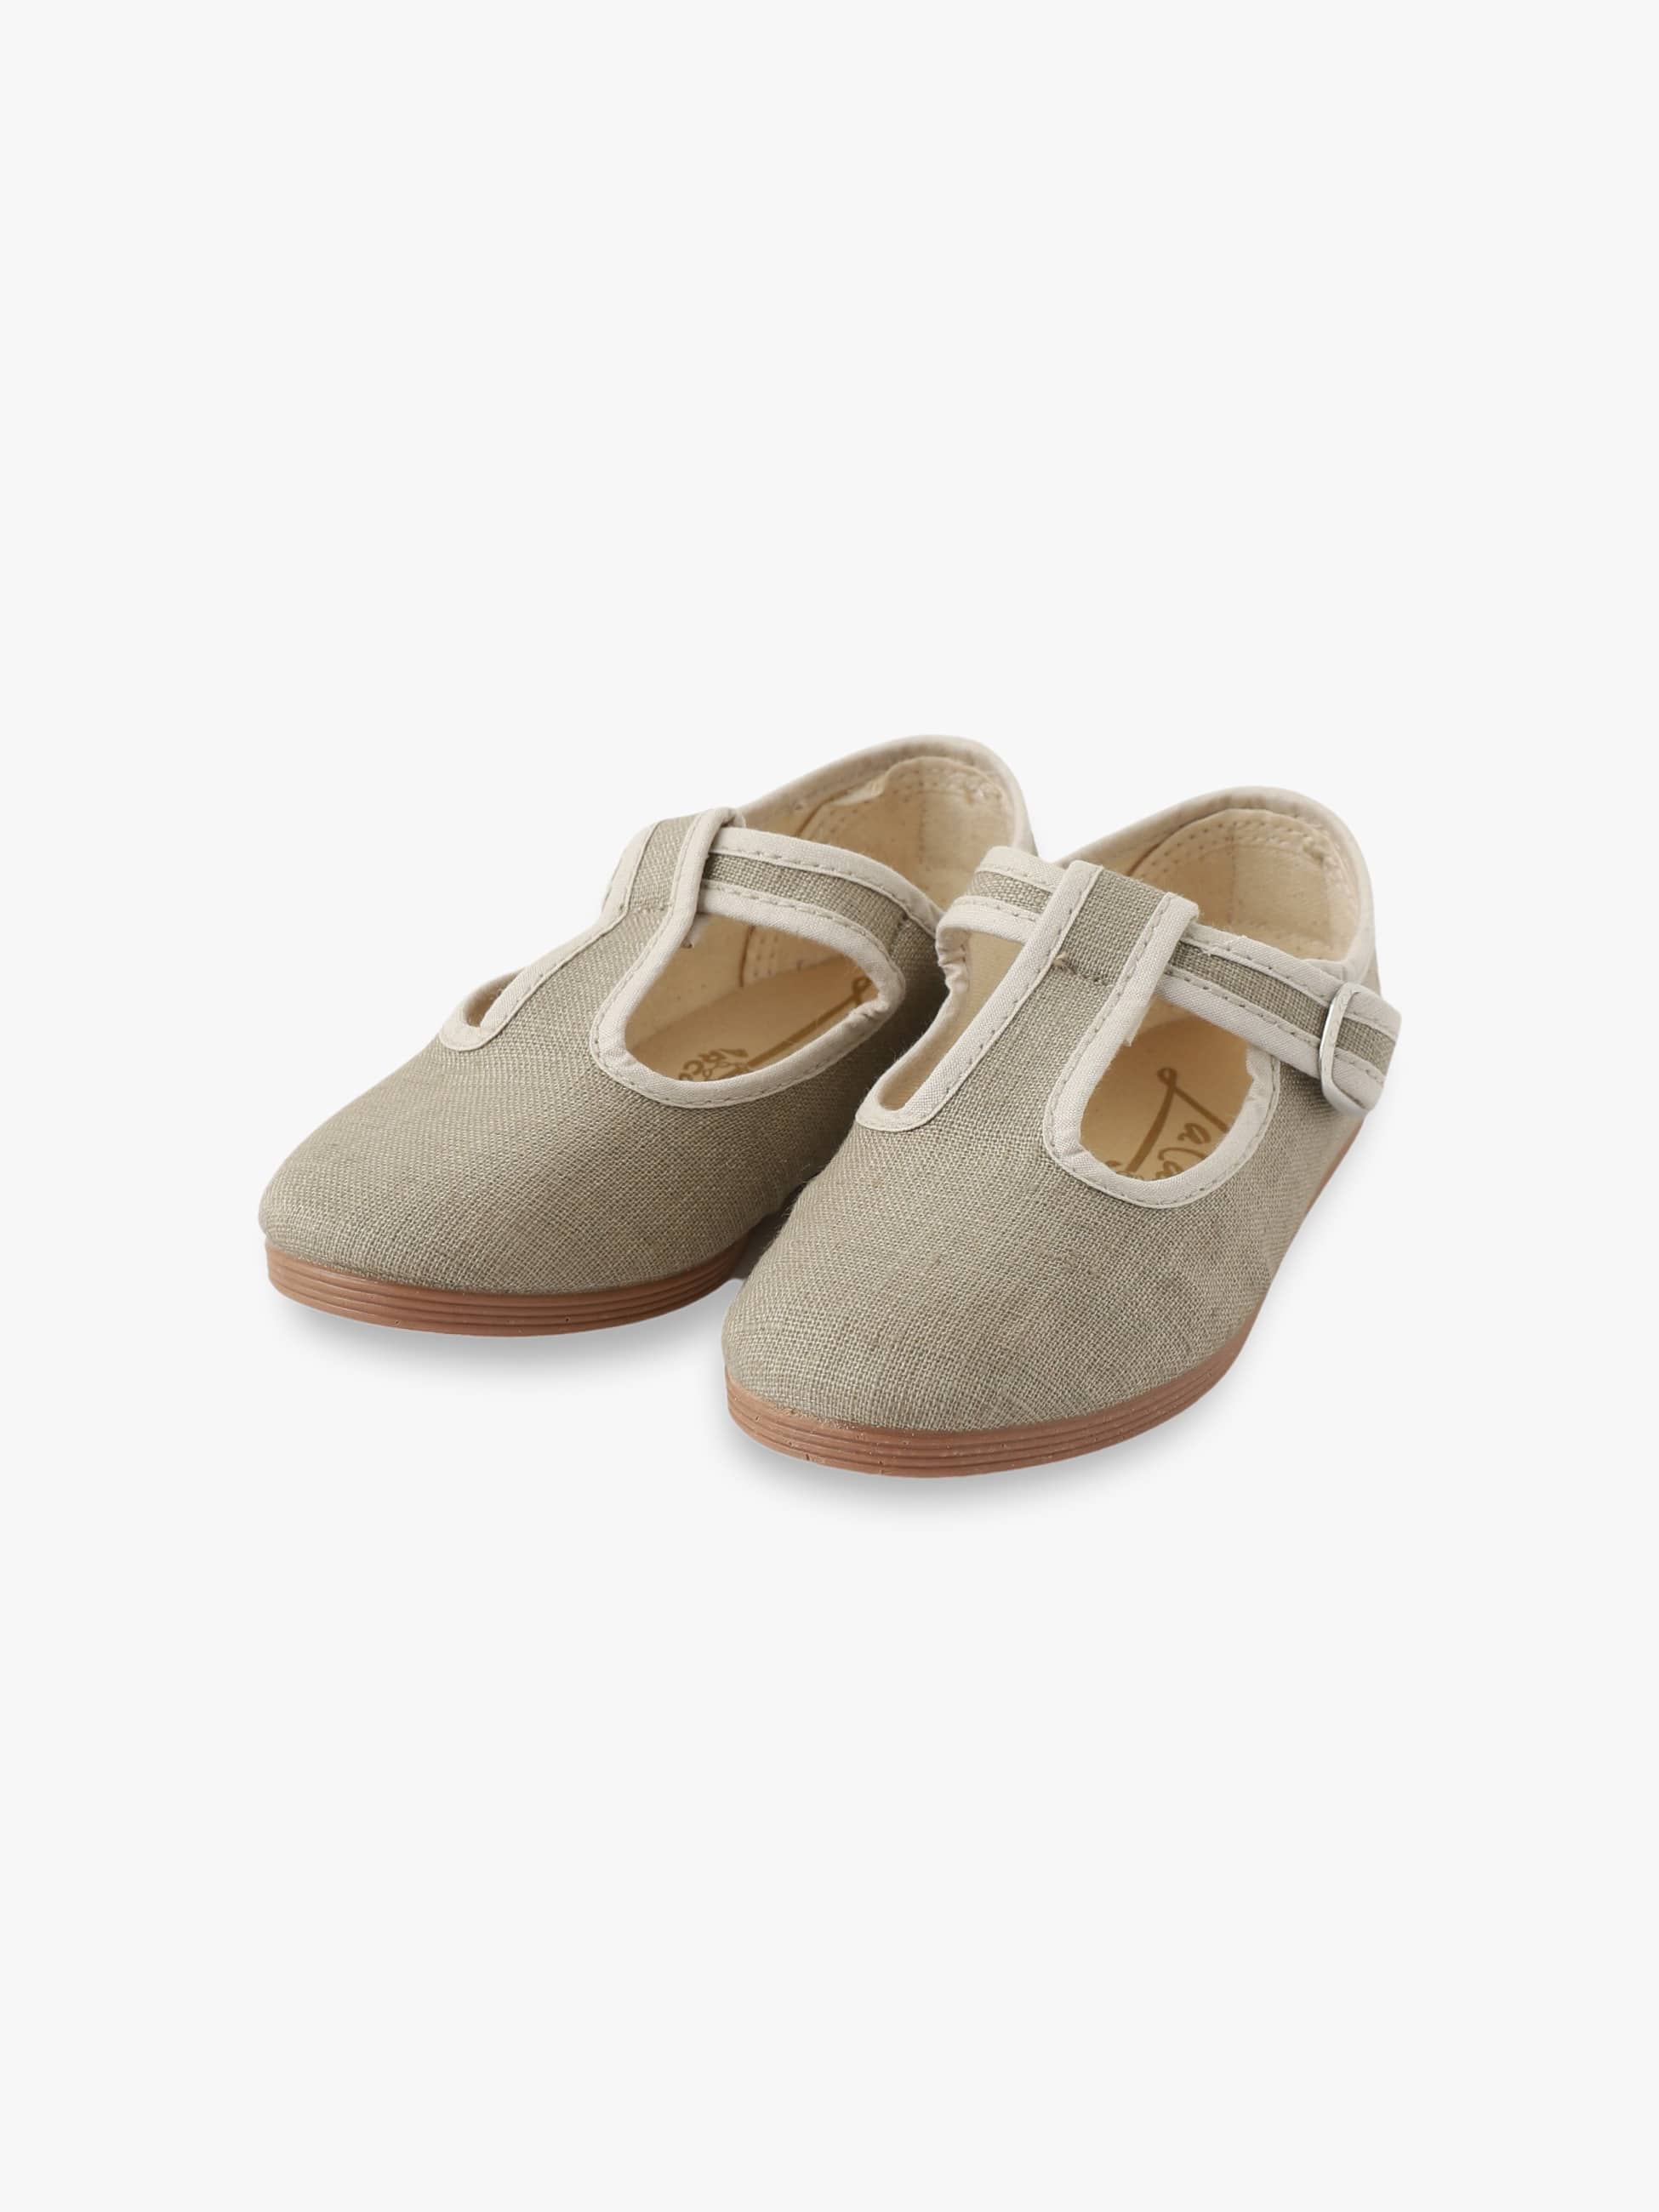 Trim Piping Sandalia Alta T Strap Linen Shoes (kids/14-17cm) 詳細画像 beige 1